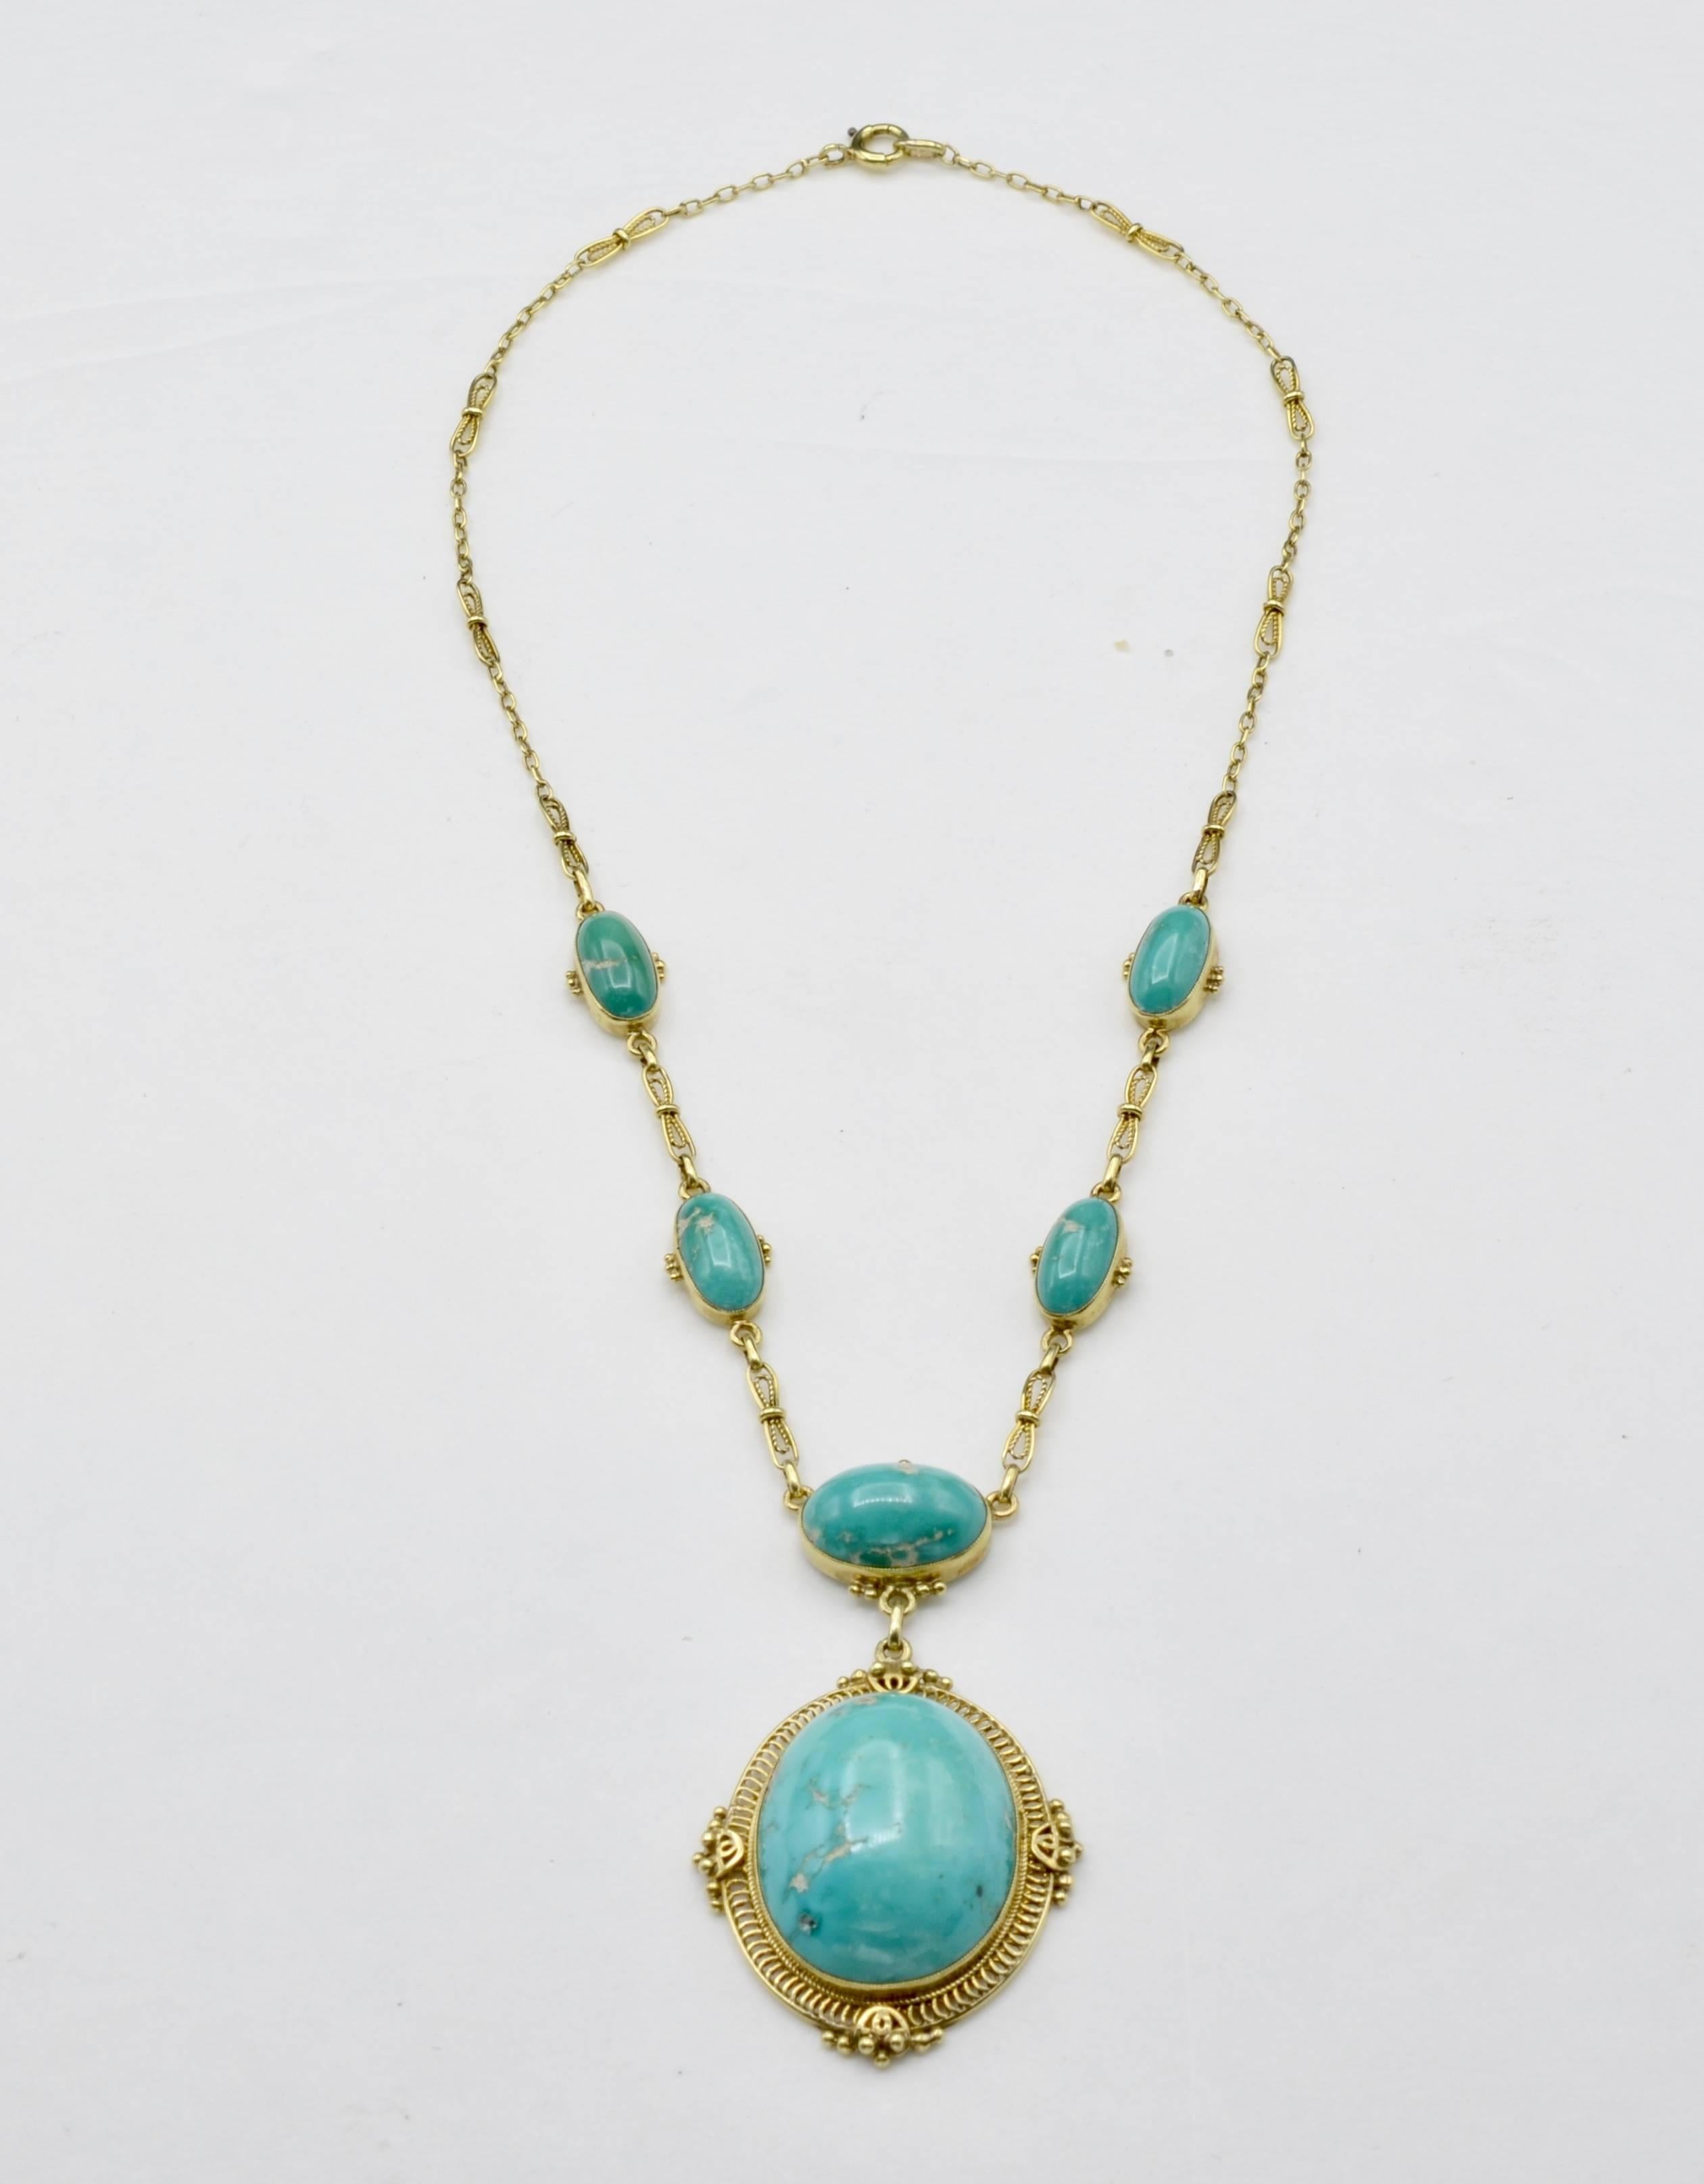 Romantic Antique 14 Karat and Turquoise Necklace